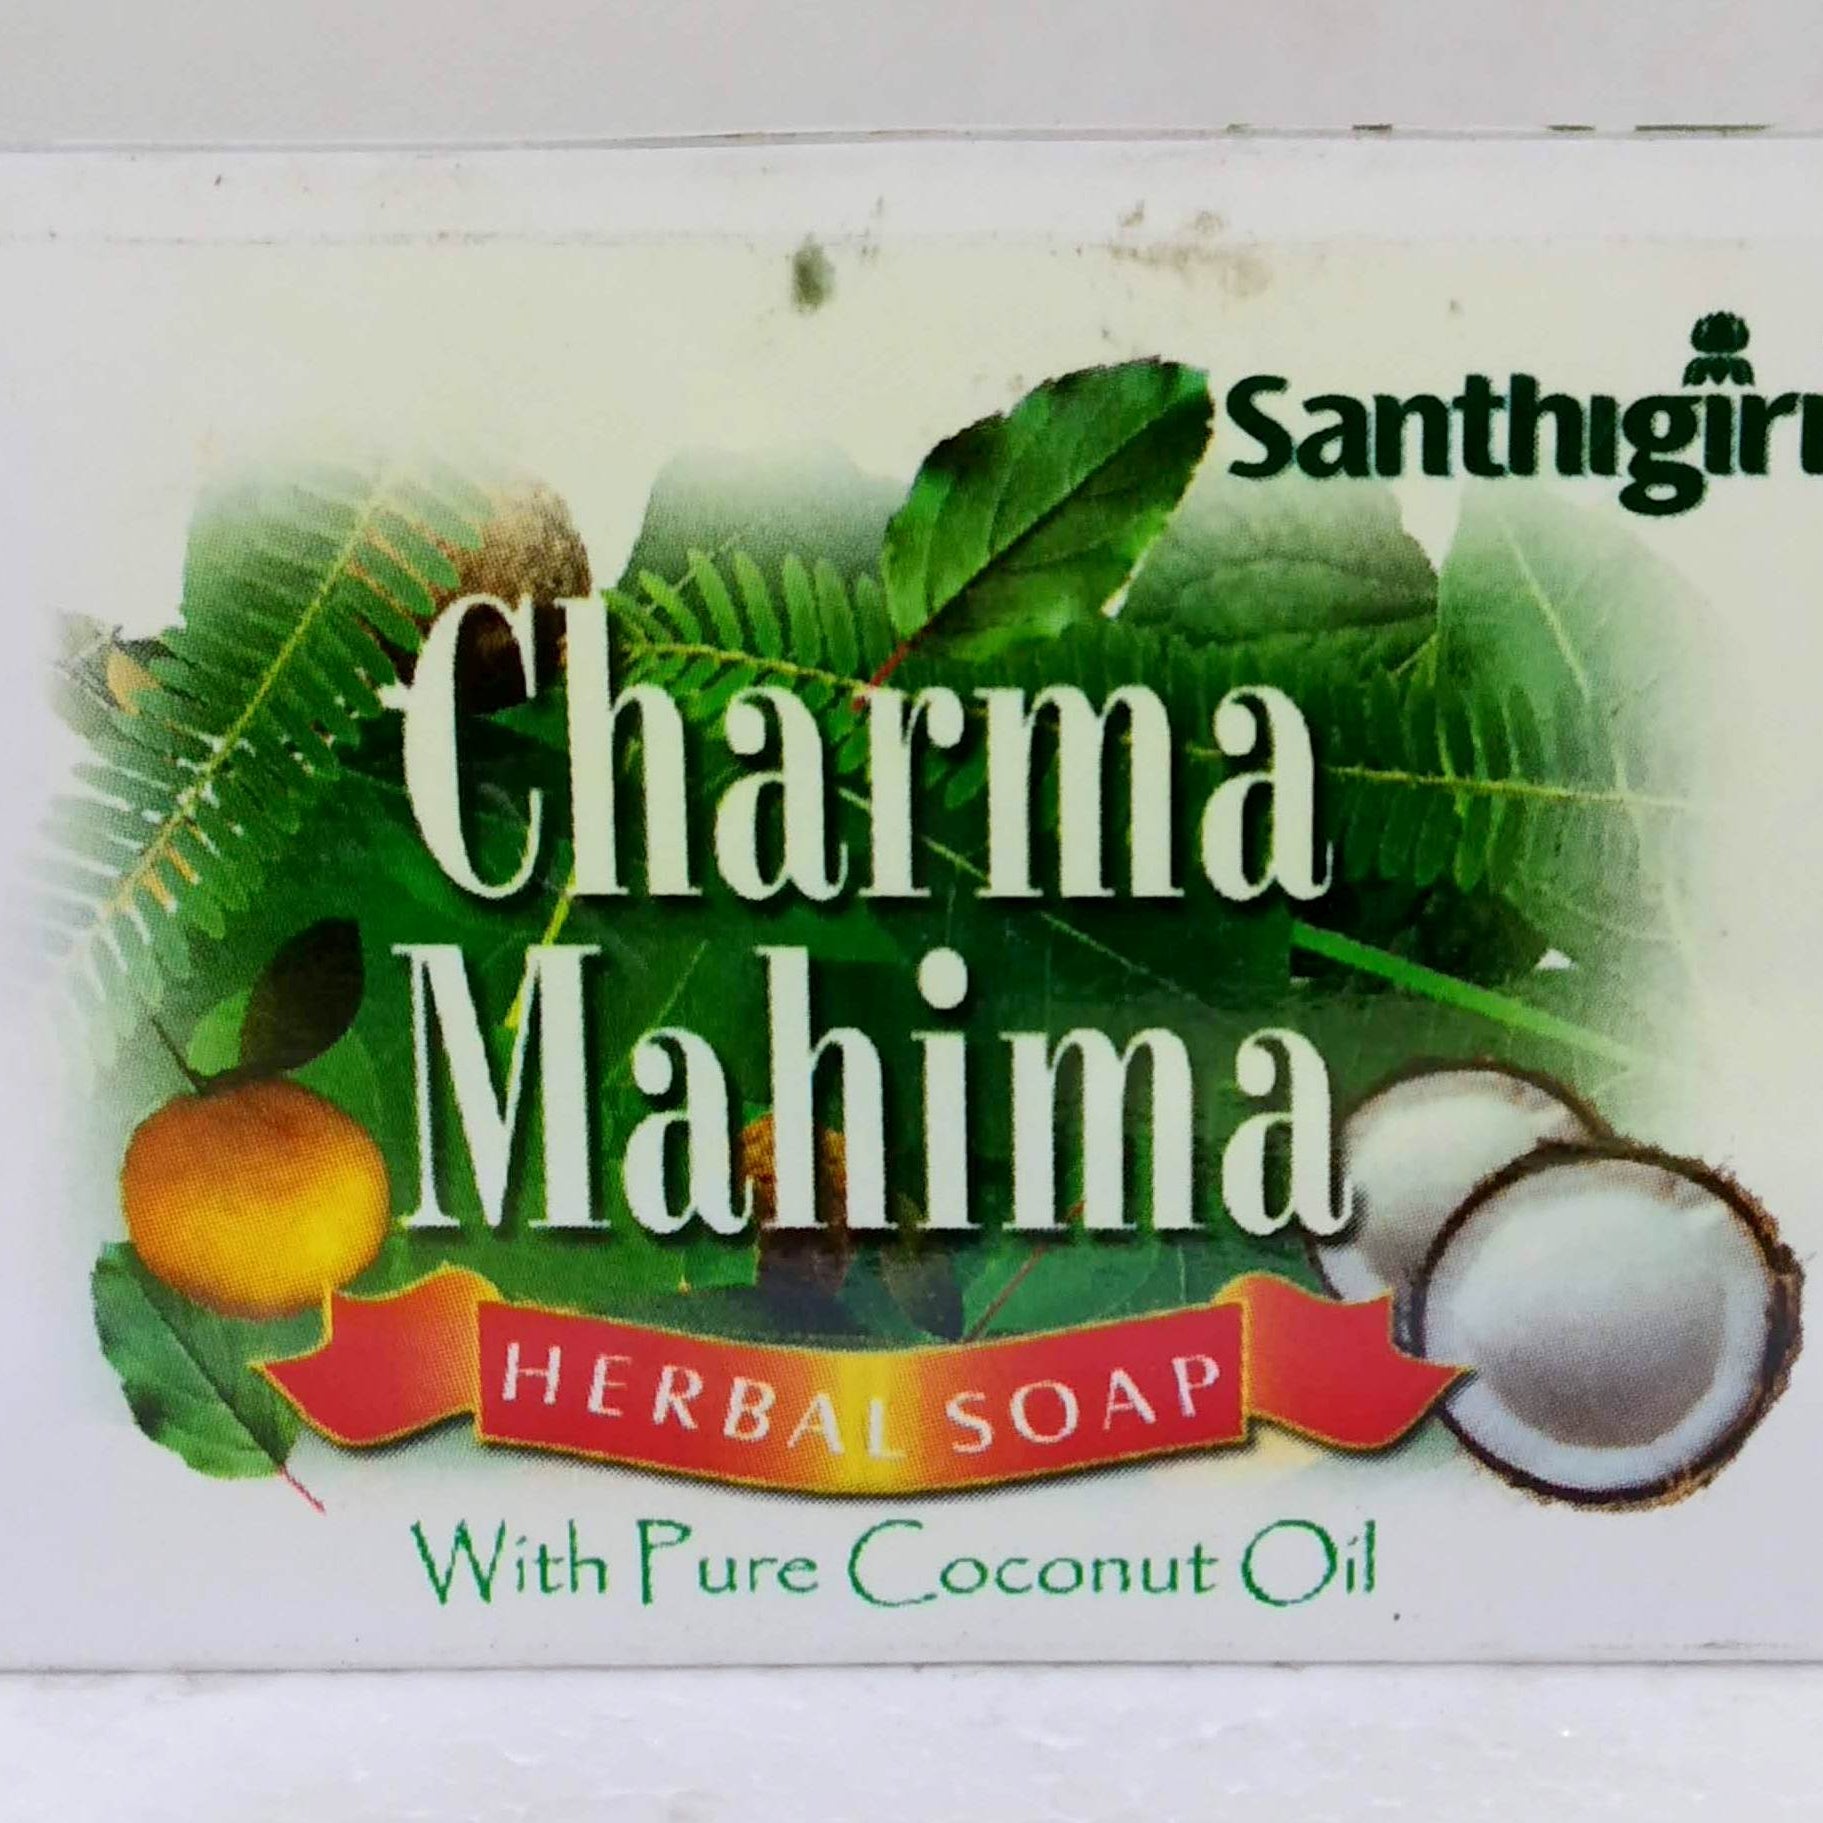 Shop Santhigiri Charma Mahima Soap 75g at price 30.00 from Santhigiri Online - Ayush Care